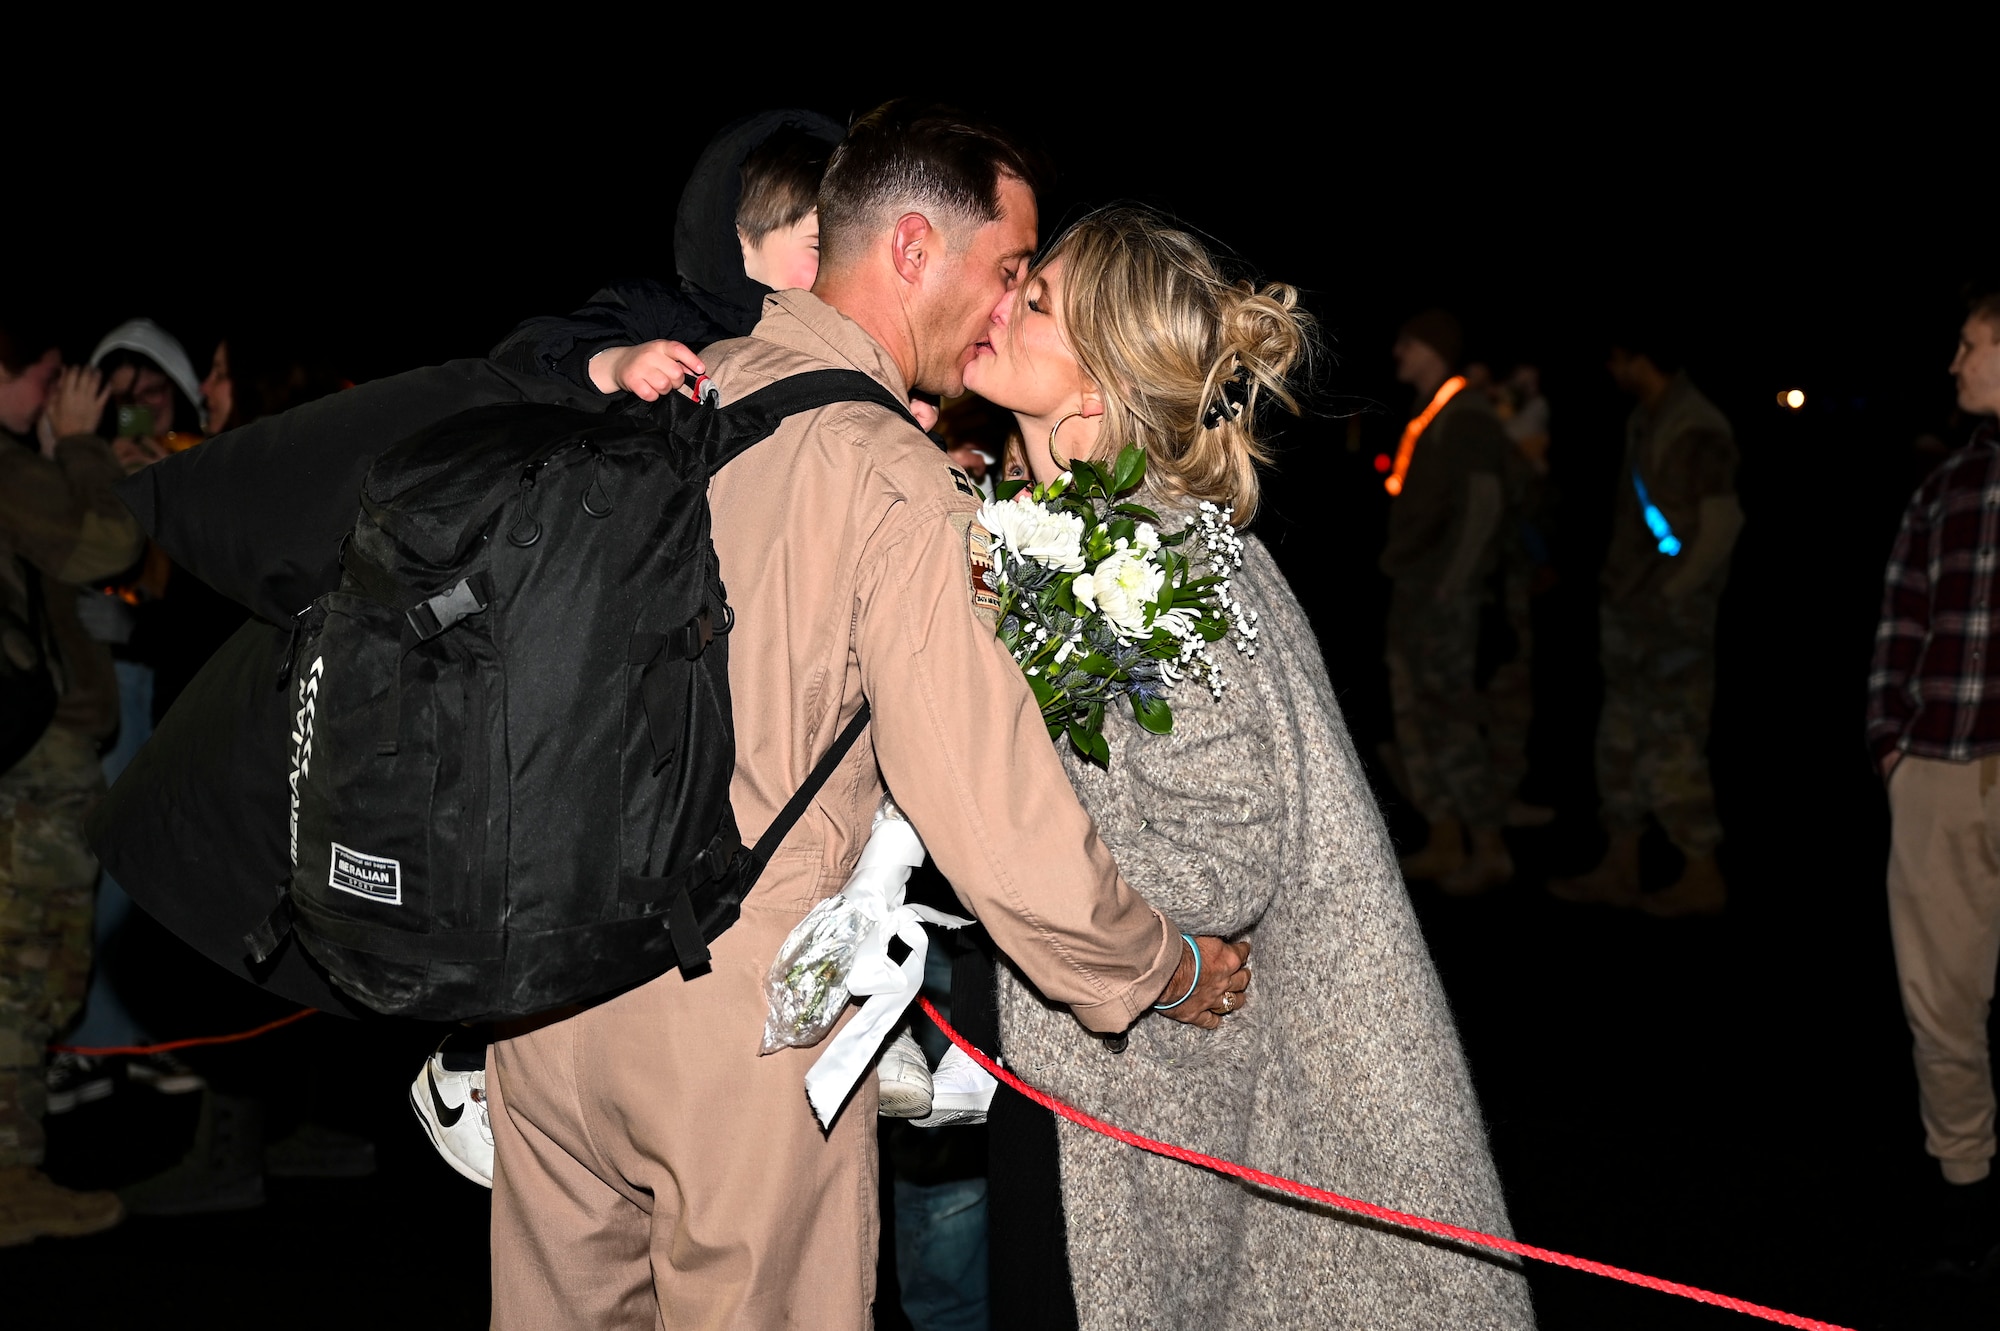 Airman reunites with family